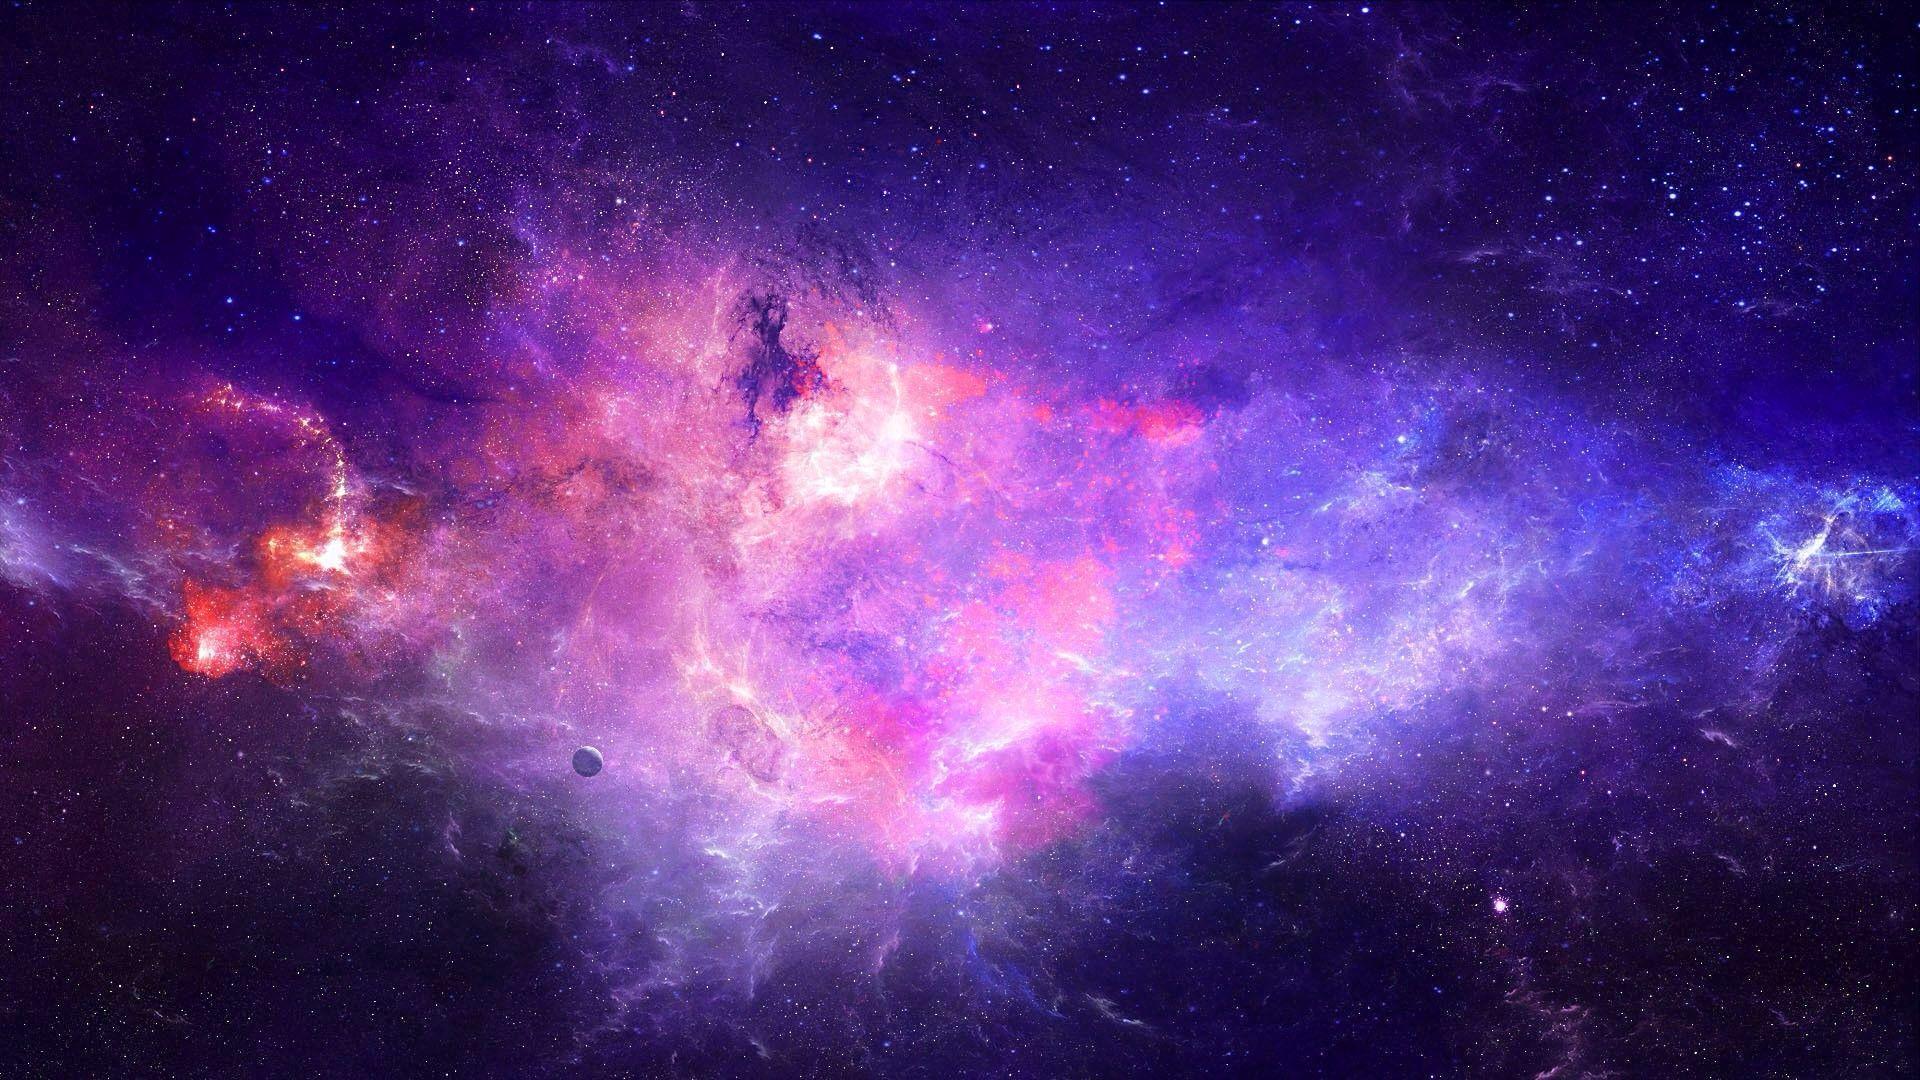 Galaxy. HD galaxy wallpaper, Galaxy wallpaper, Desktop